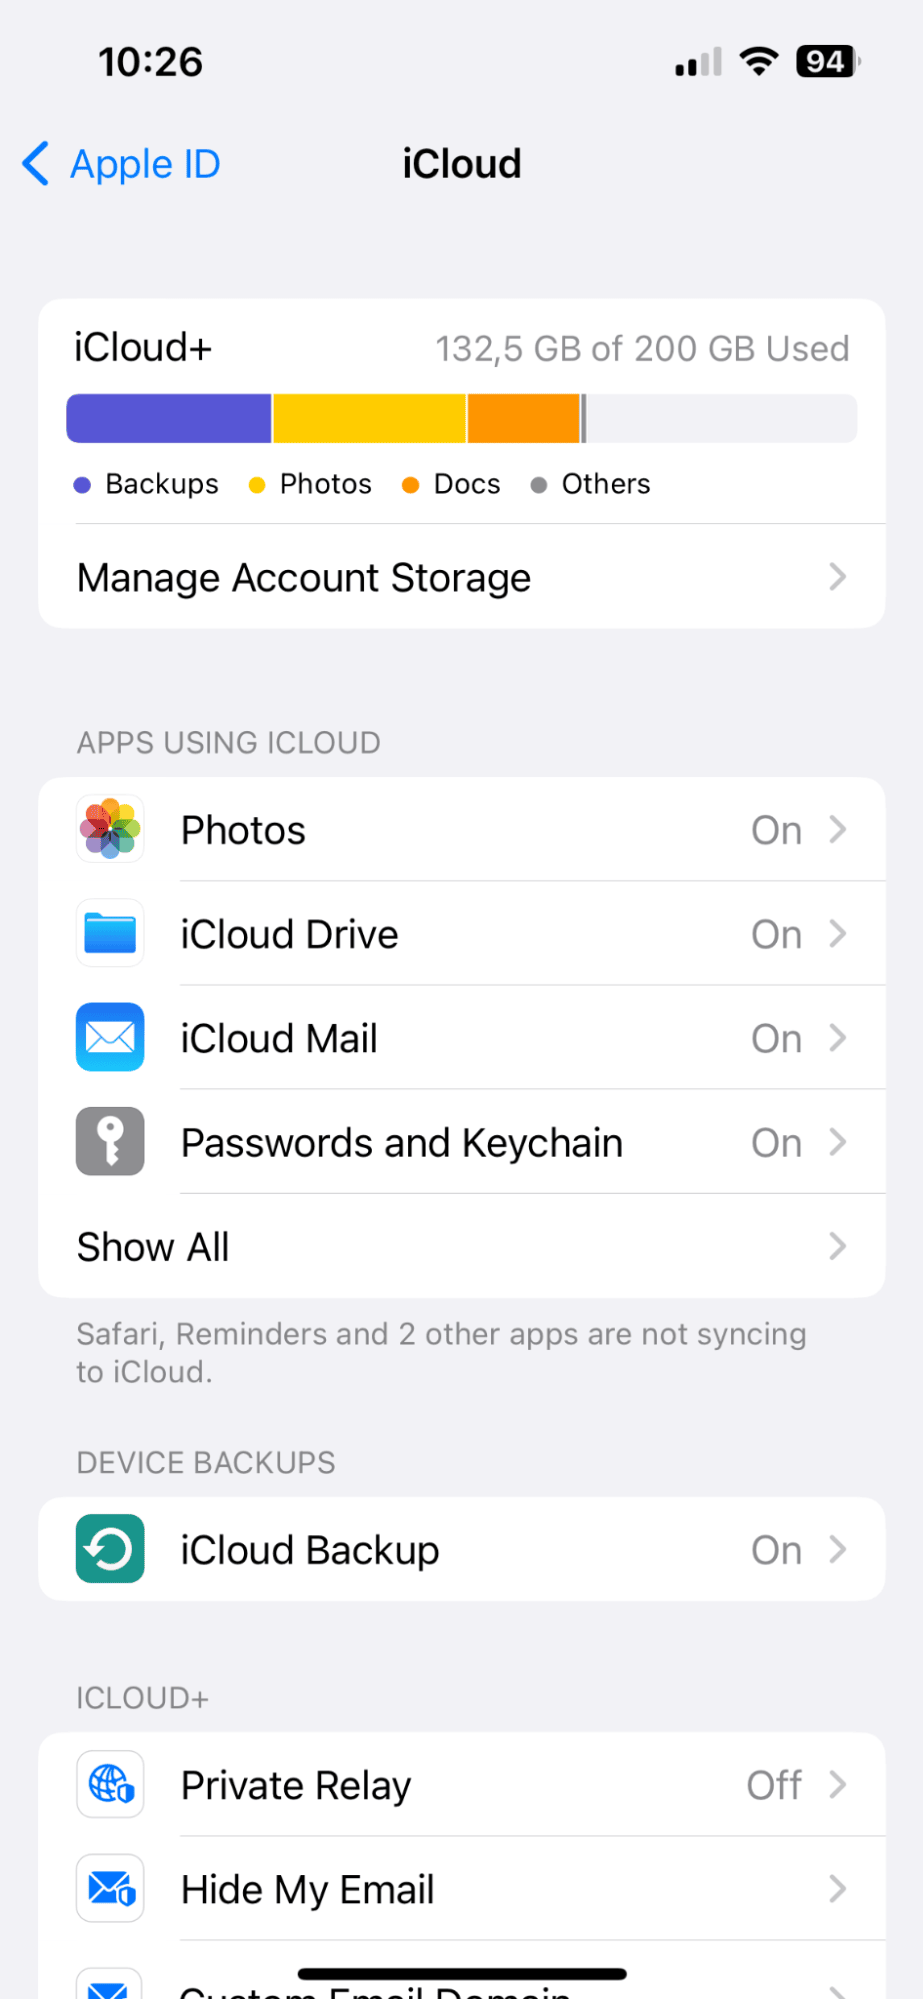 iCloud storage on an iPhone